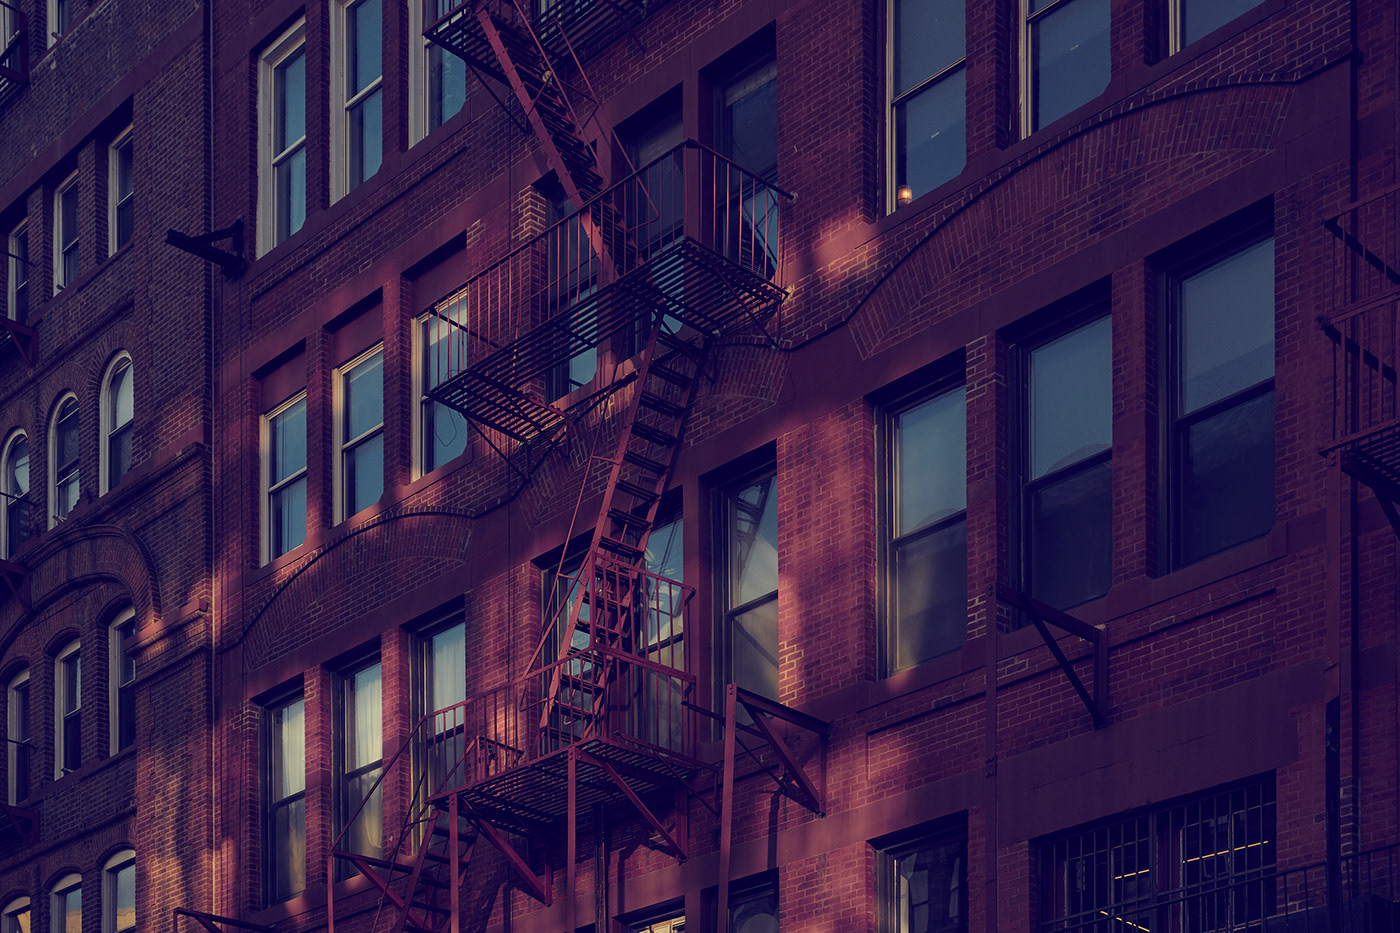 New York streetphotography Photography  city